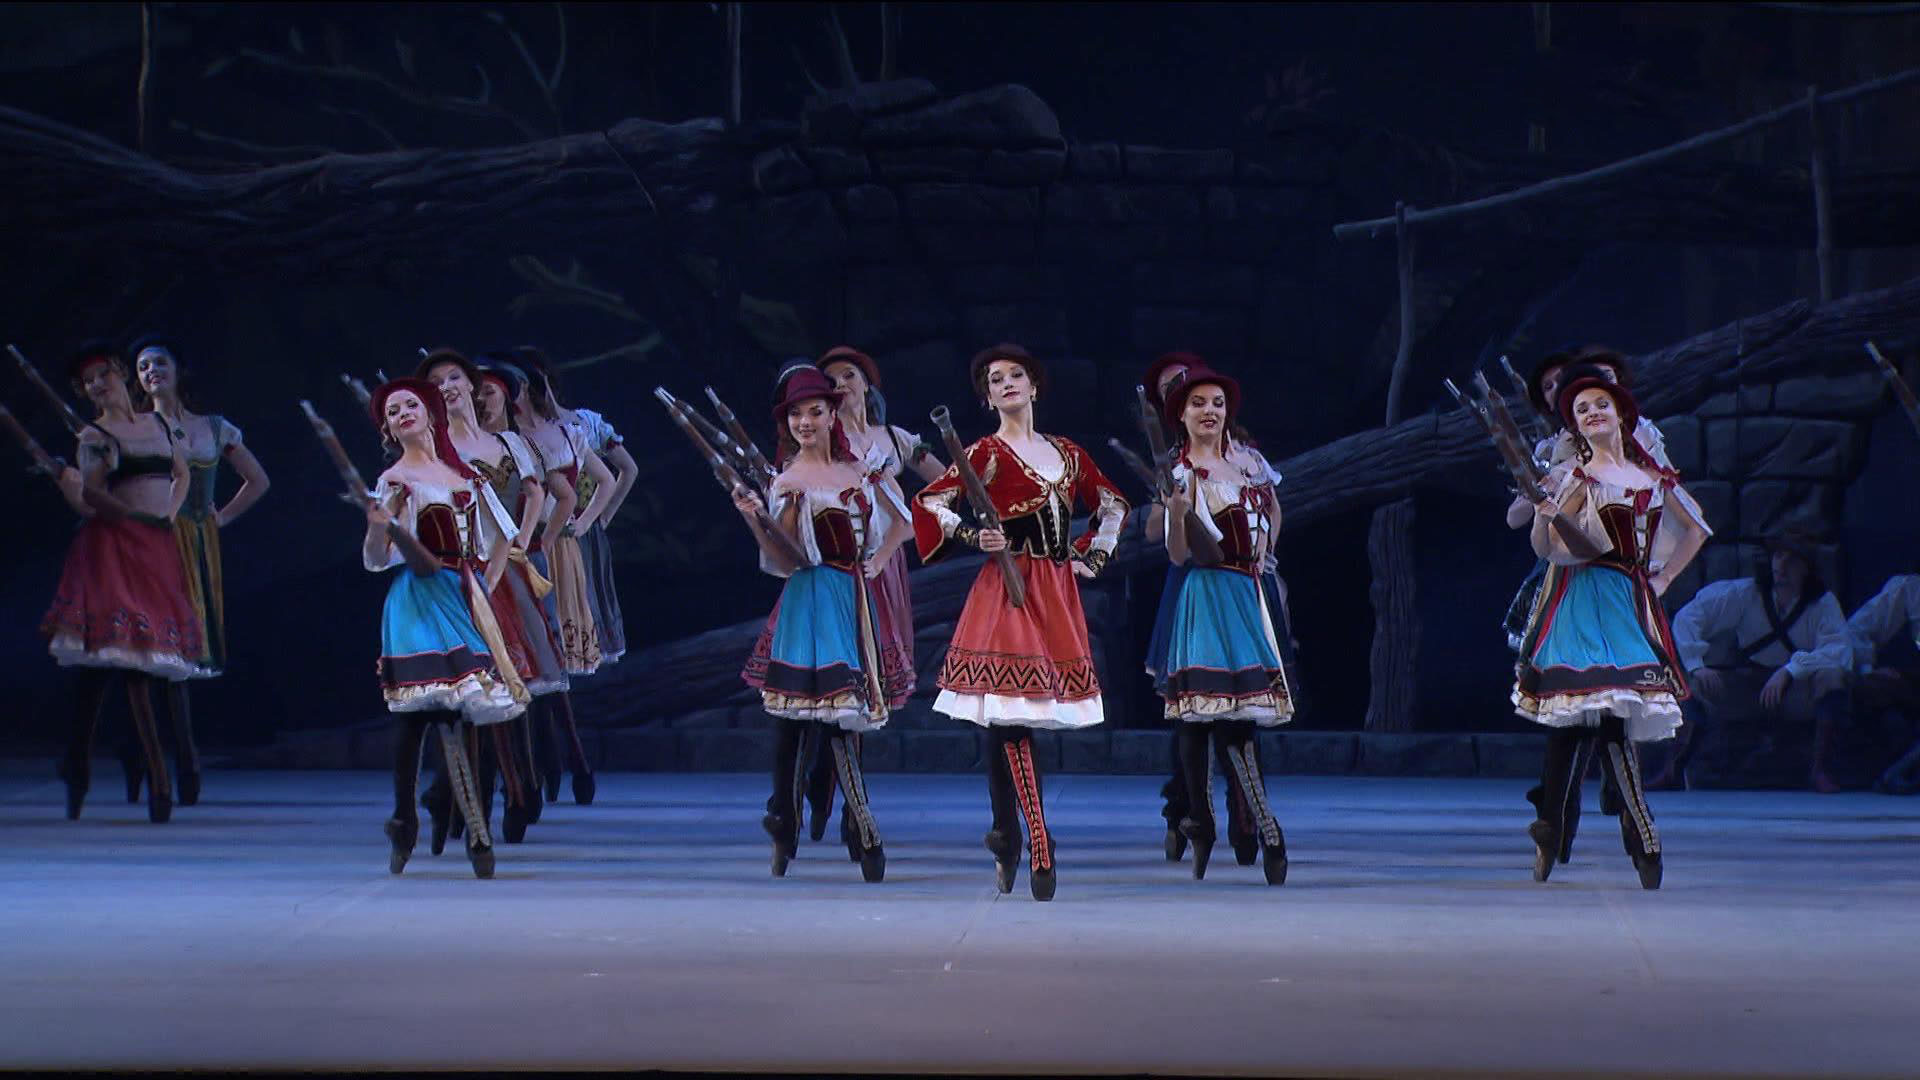 красноярский театр оперы и балета